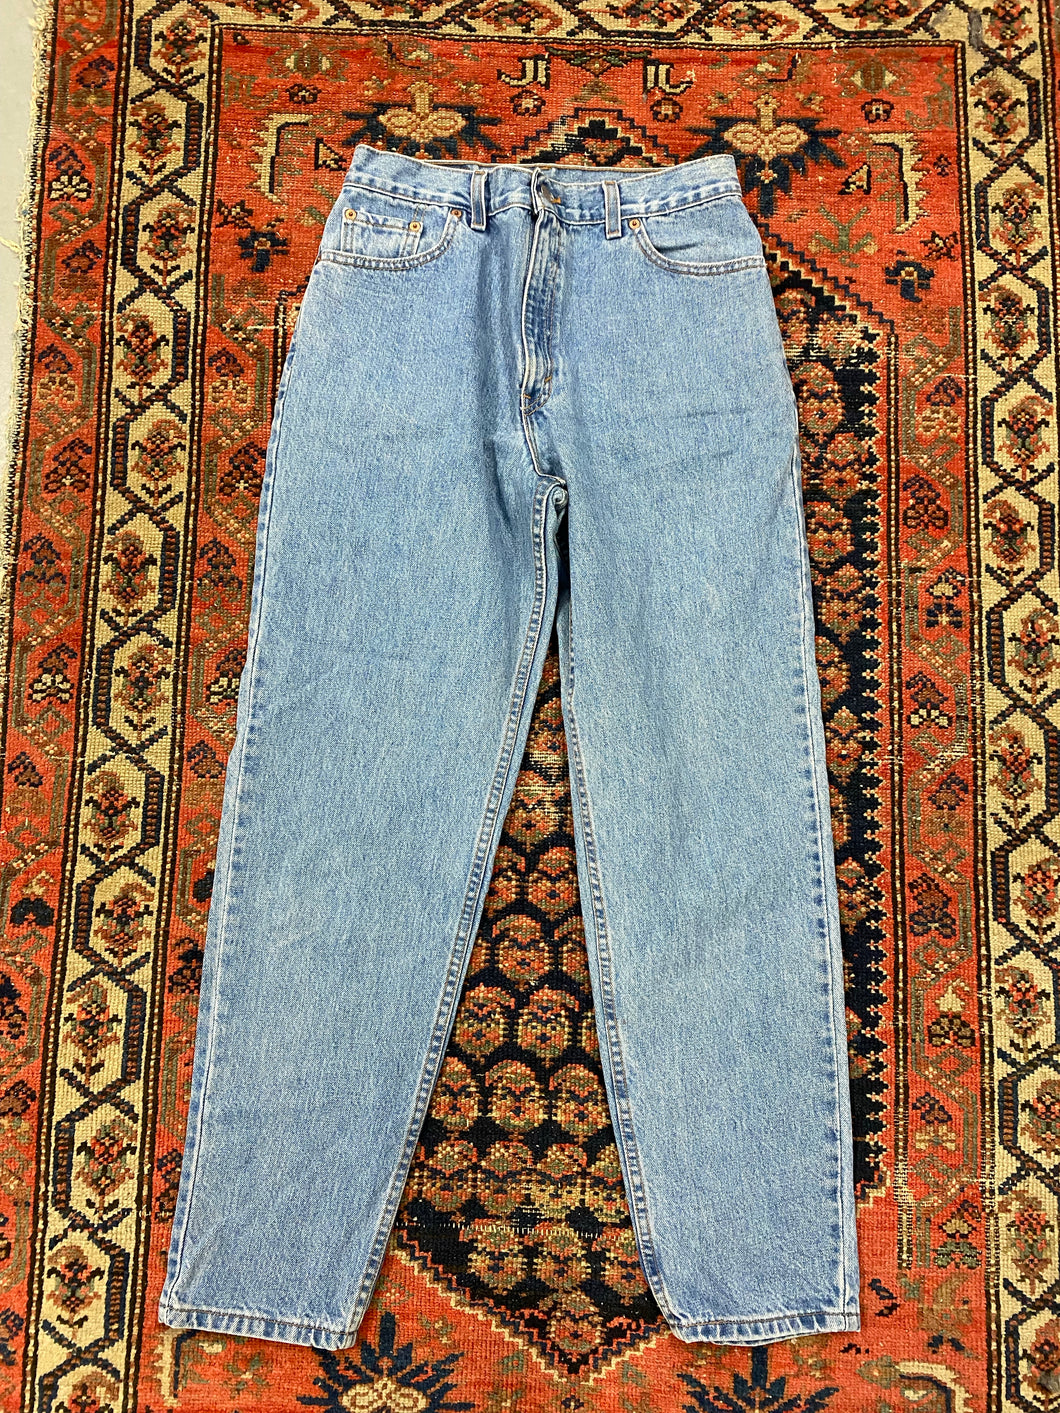 Vintage High Waisted Levi’s Denim Jeans - 30in